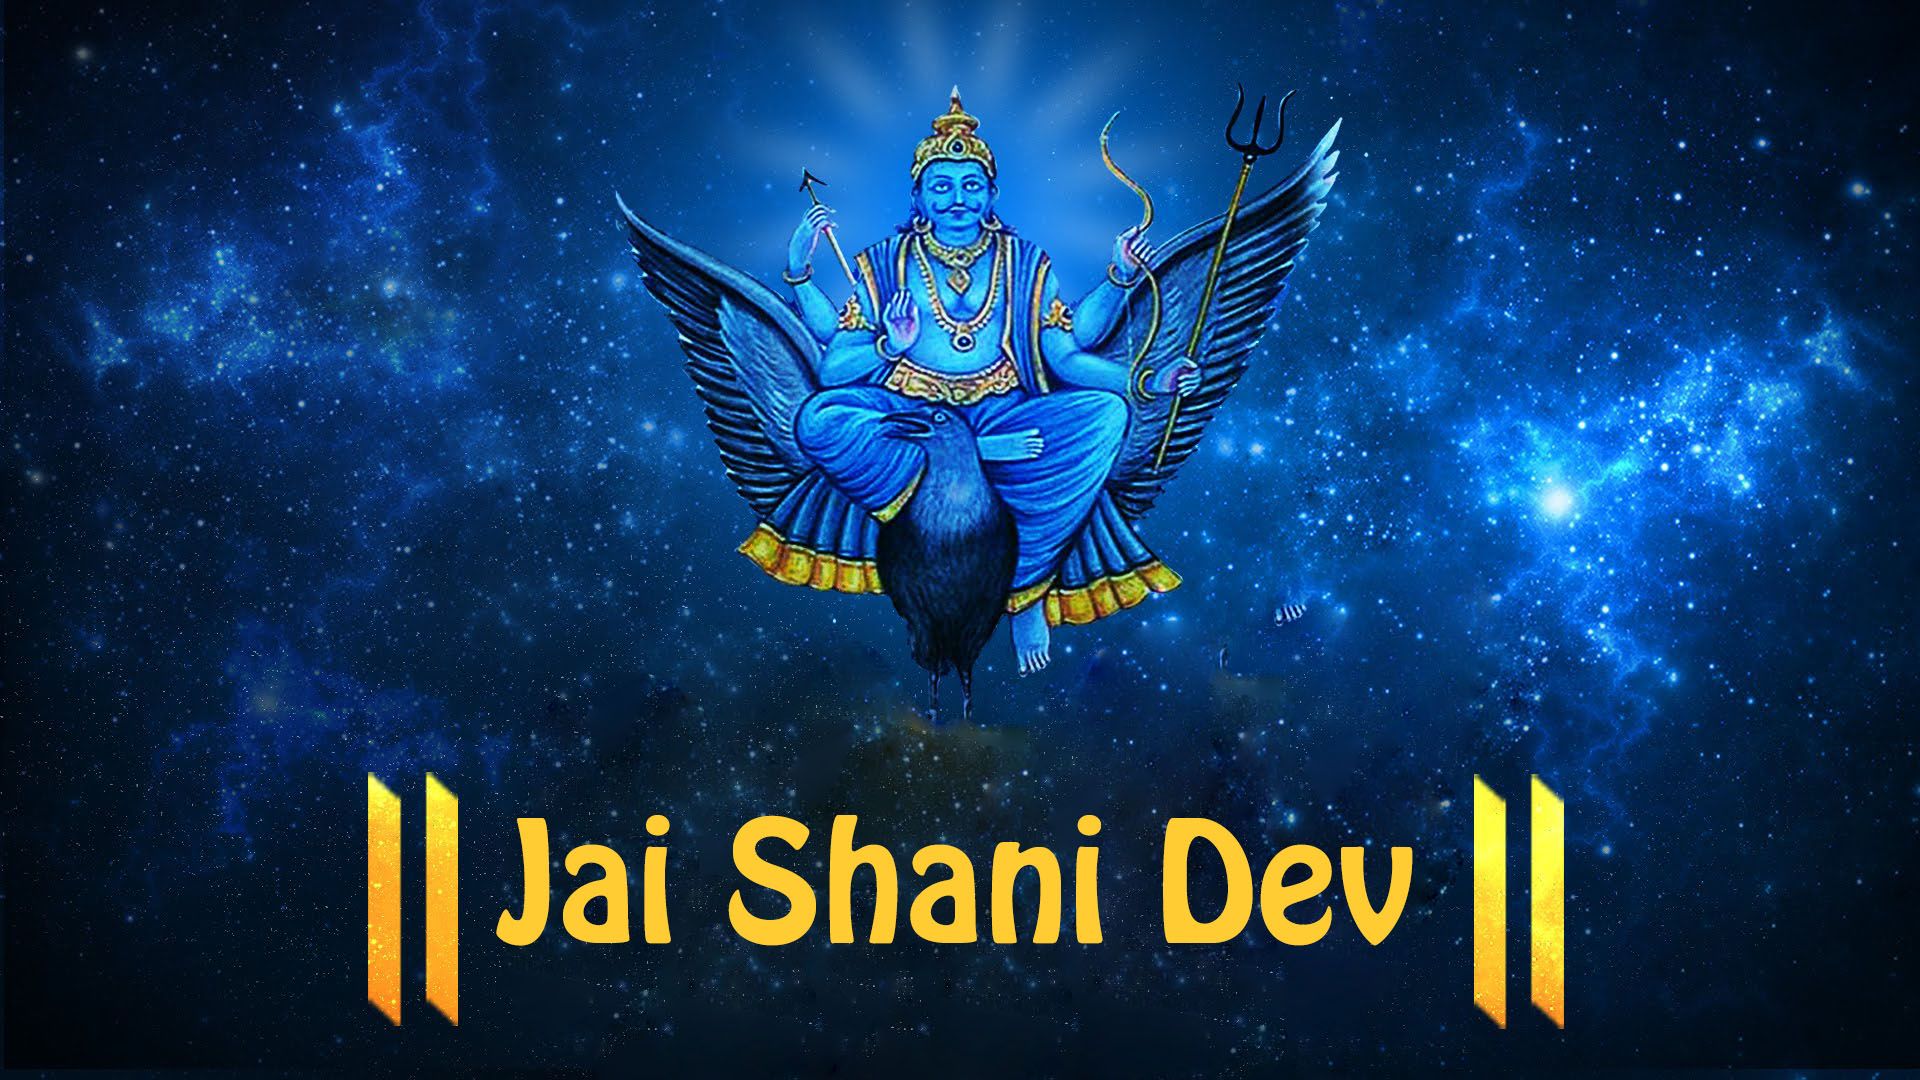  Latest New Jai Shani Dev Images For Wallpaper  MyGodImages